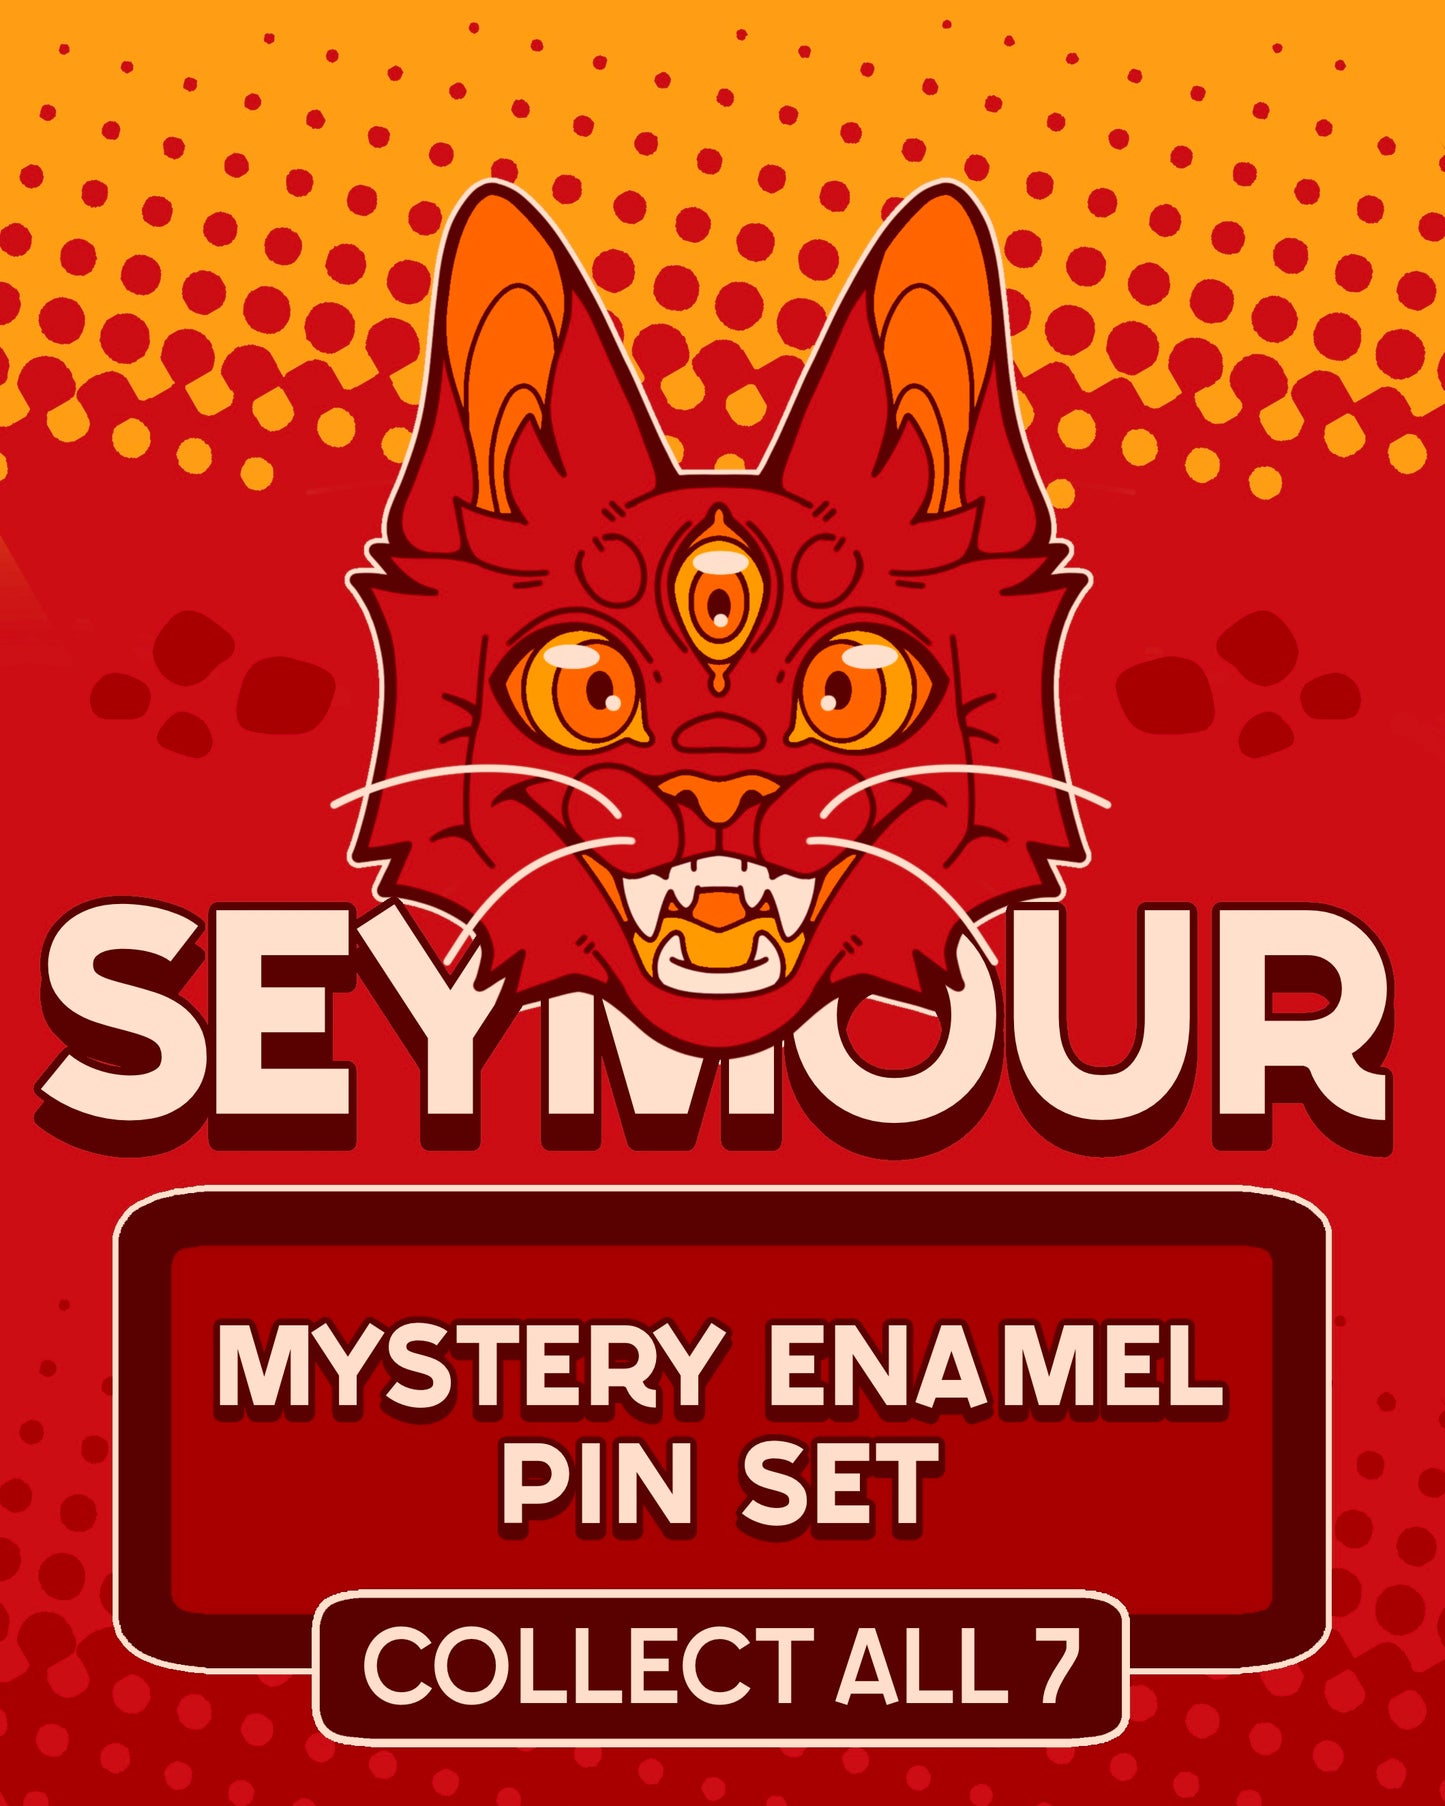 Seymour Mystery Enamel Pin Set Blind Bag